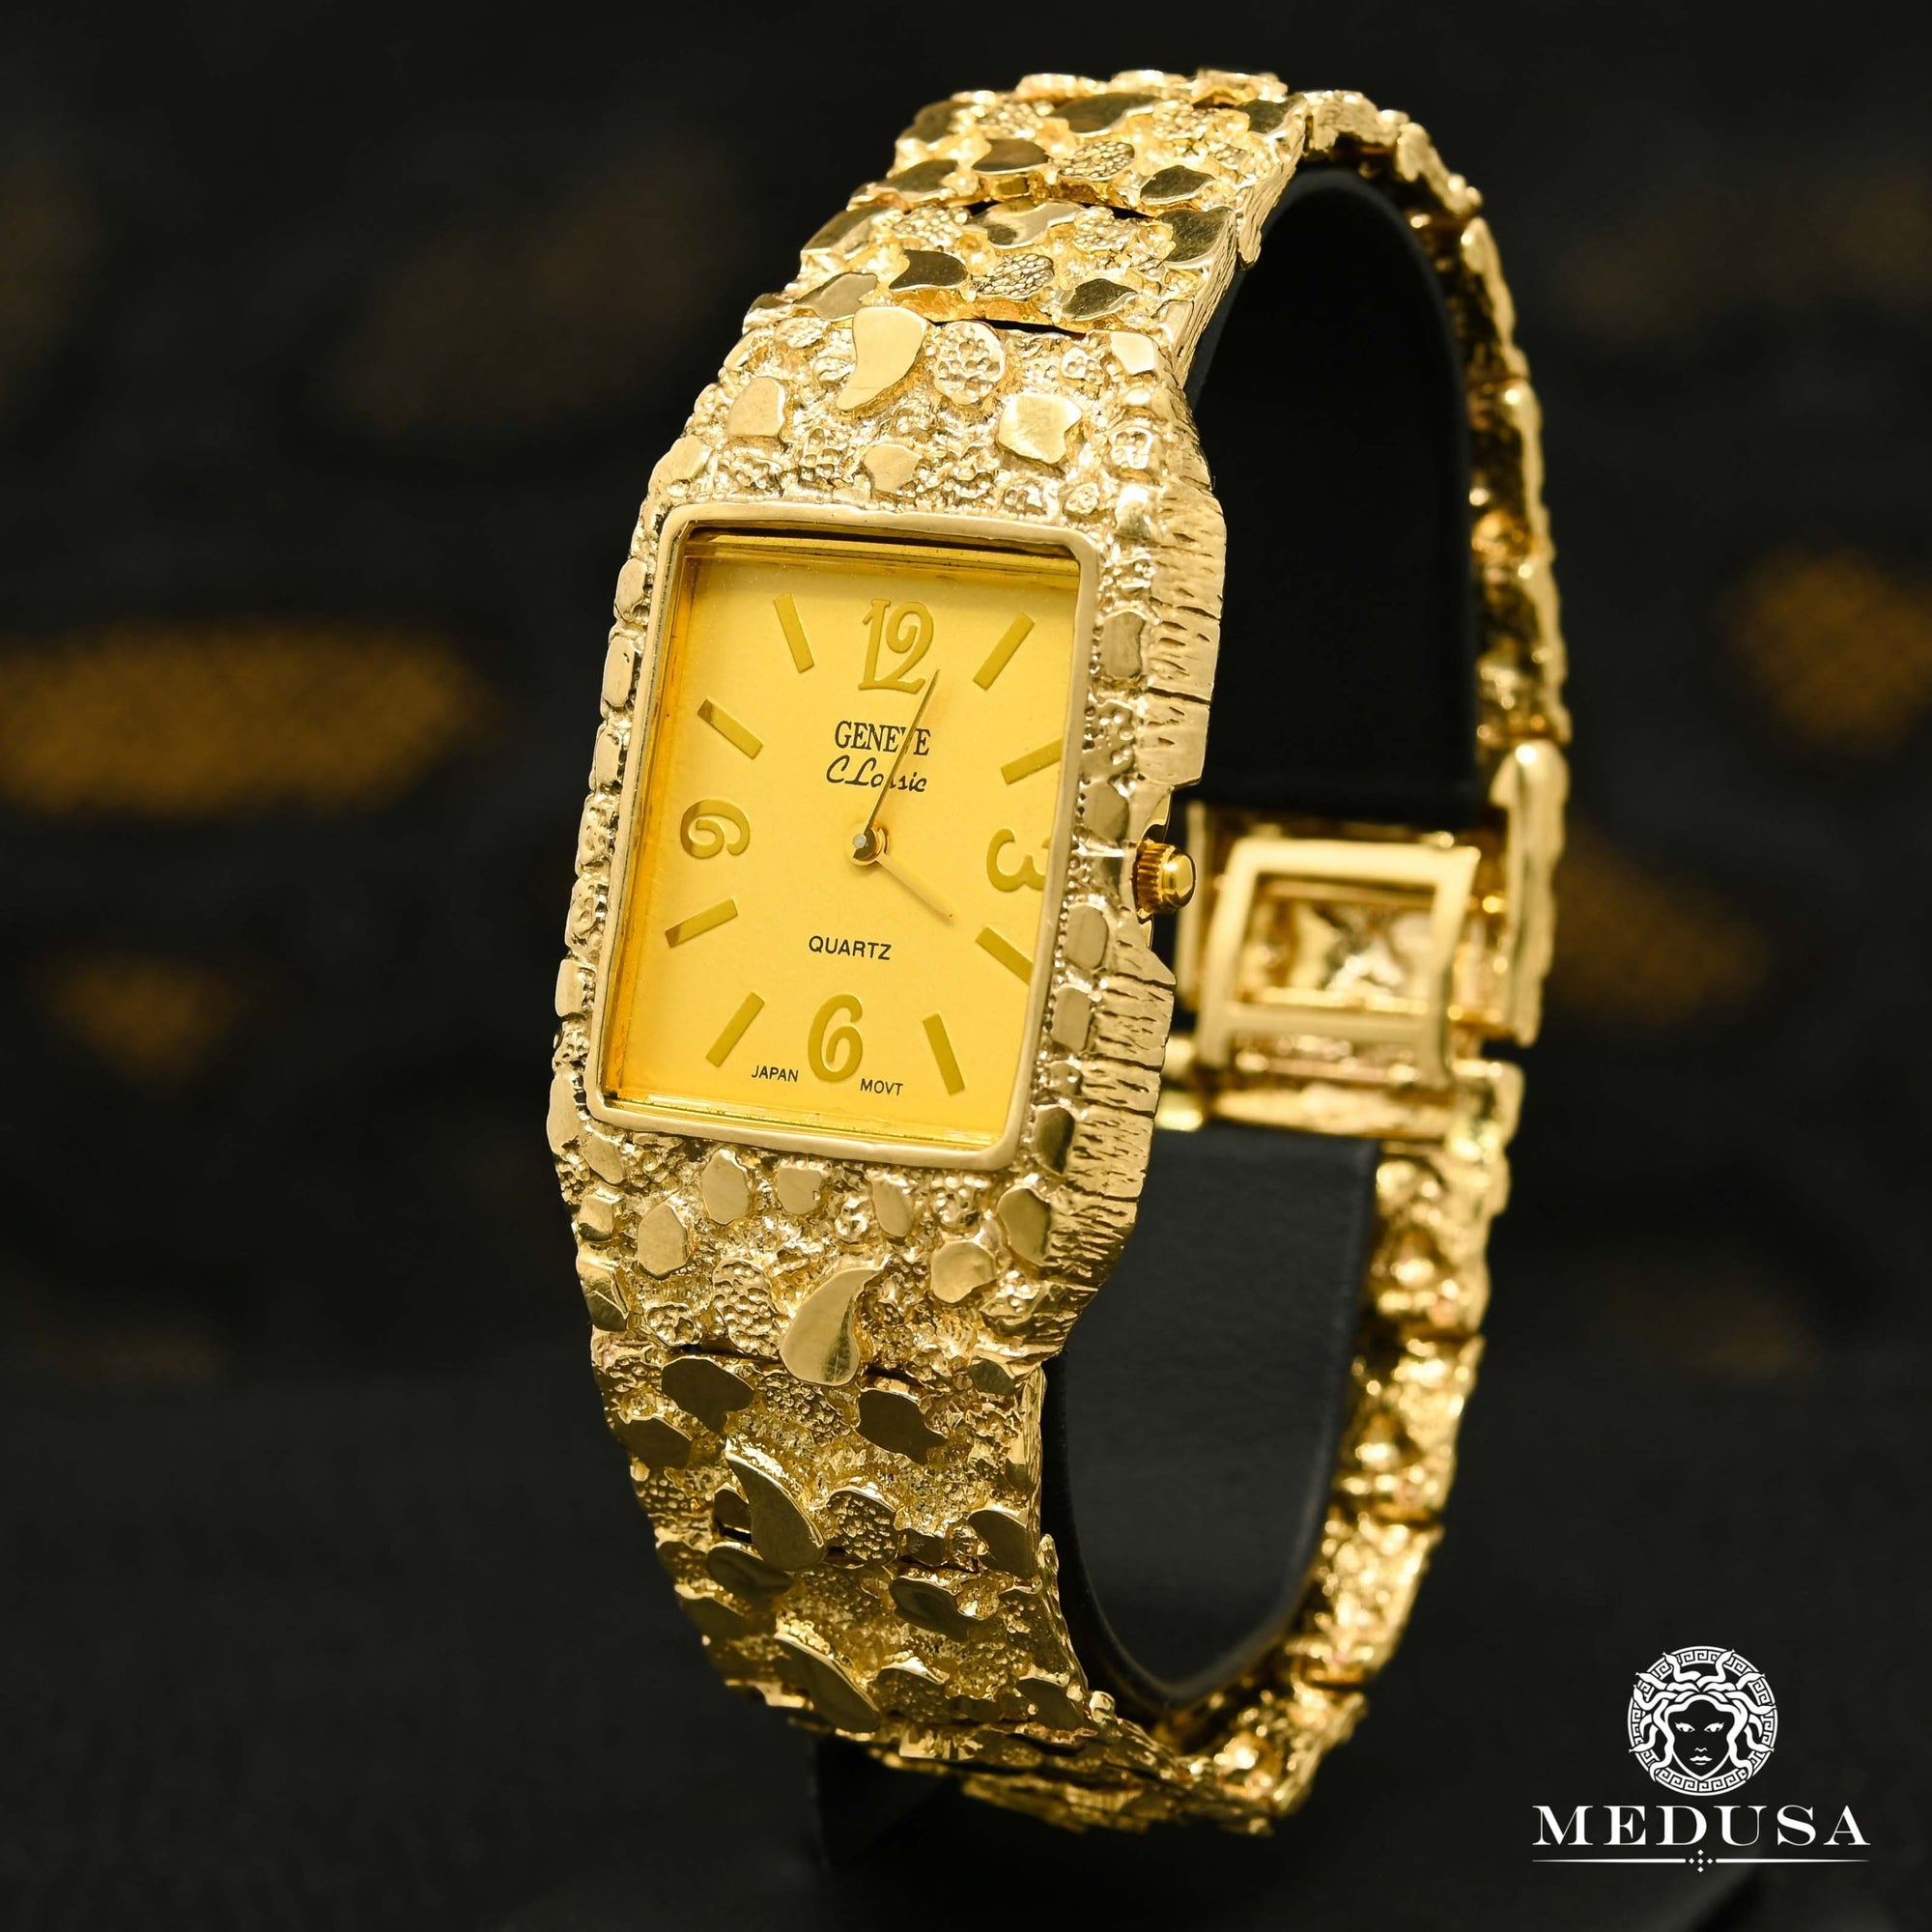 10K Gold Watch | Genève H5 Men's Watch - Nugget Gold / Yellow Gold